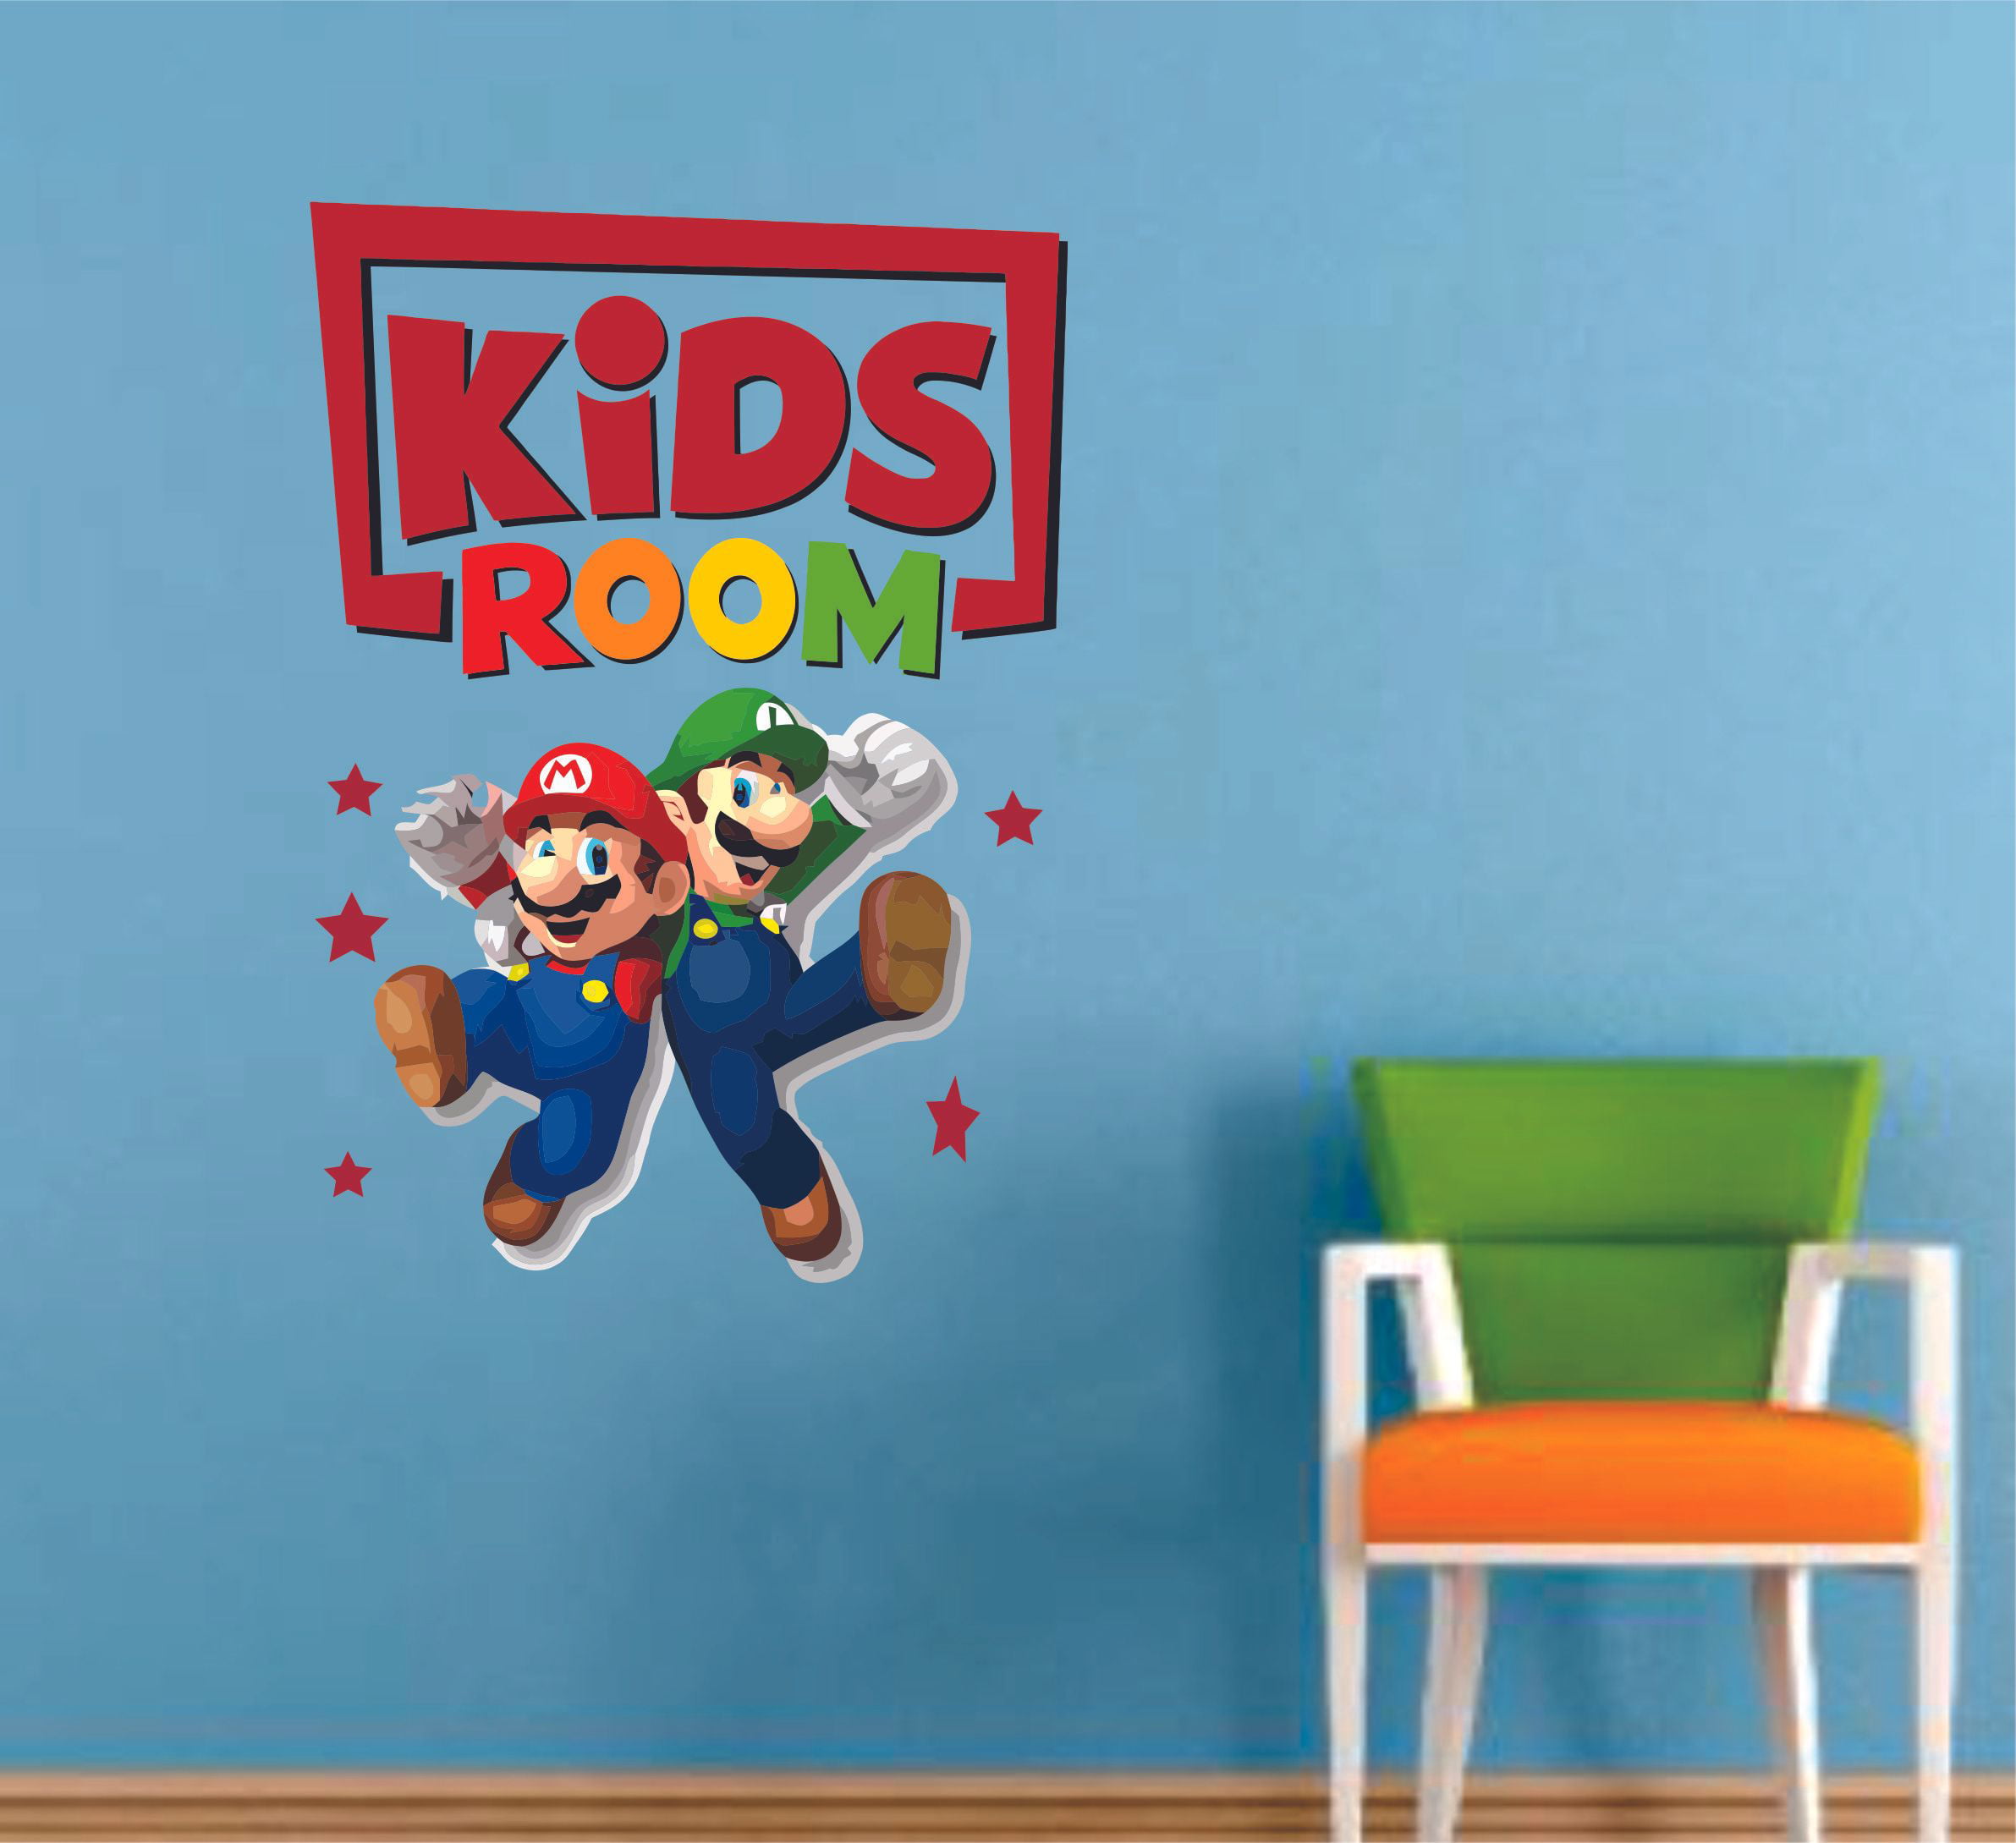 Cartoon Mario Bros Wall Stickers For Kids Rooms Decals Nursery Home Decor Art